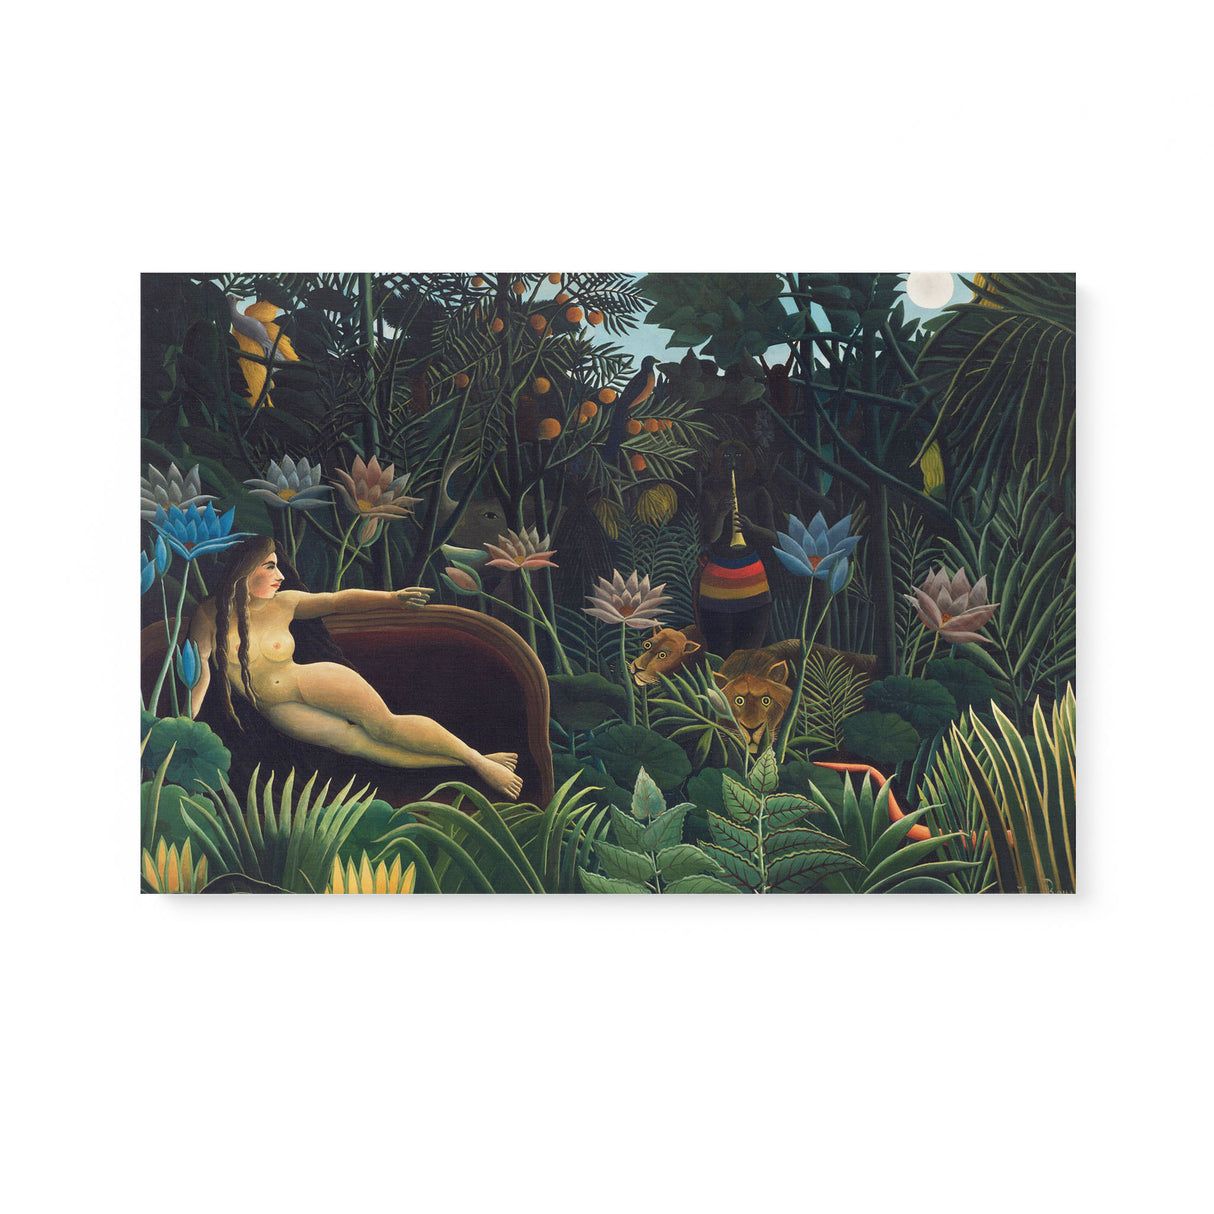 "The Dream" Botanical Wall Art Canvas Print by Henri Rousseau Canvas Wall Art Sckribbles 24x16  